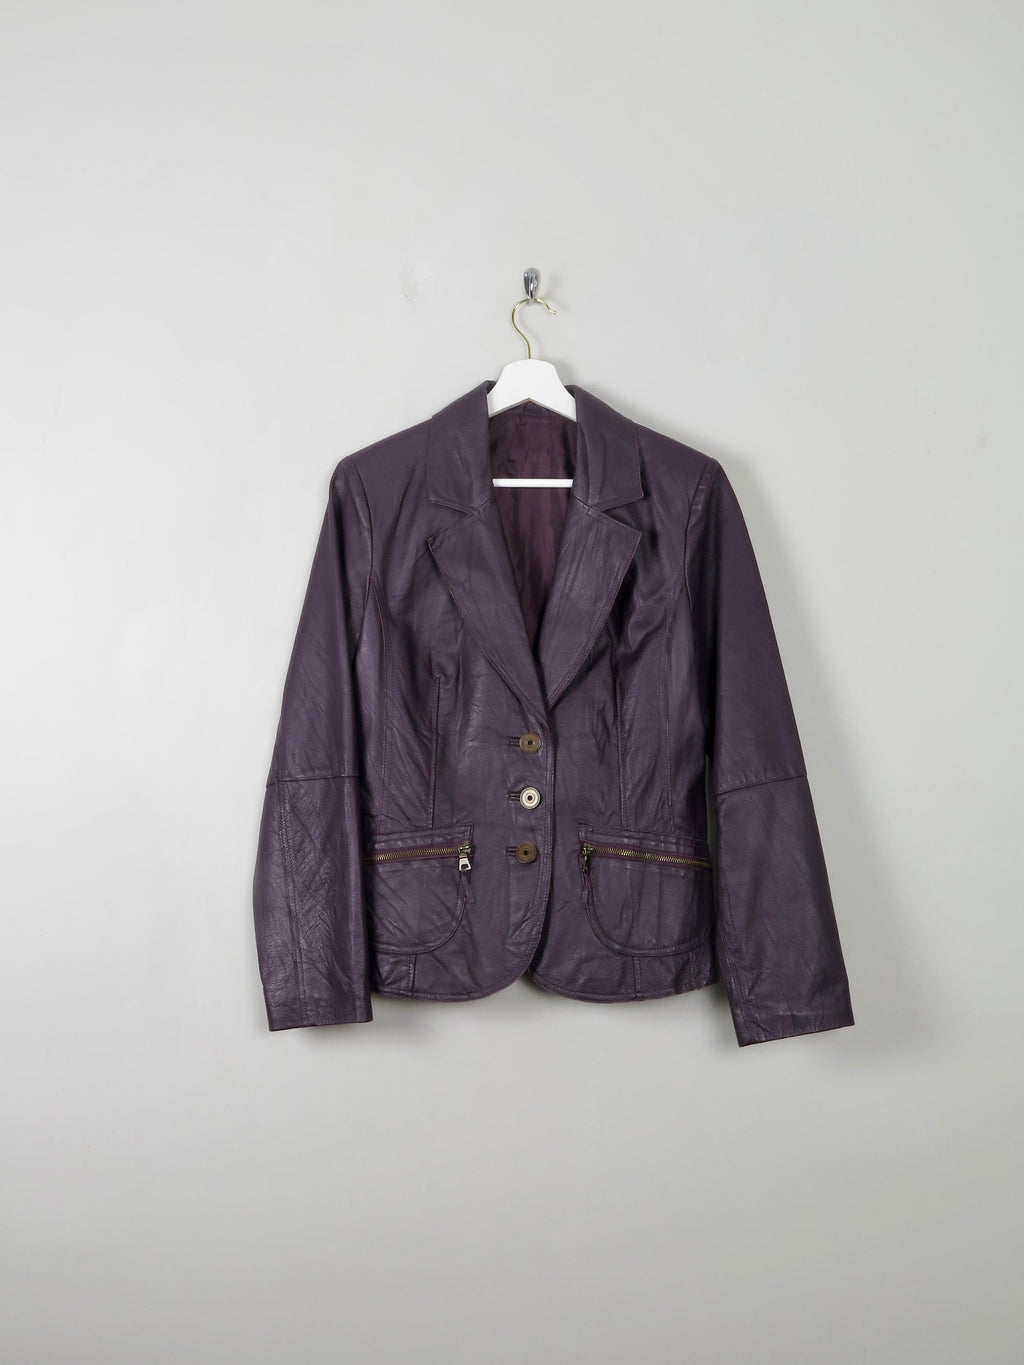 Women's Vintage Leather Jacket Grape S/M - The Harlequin